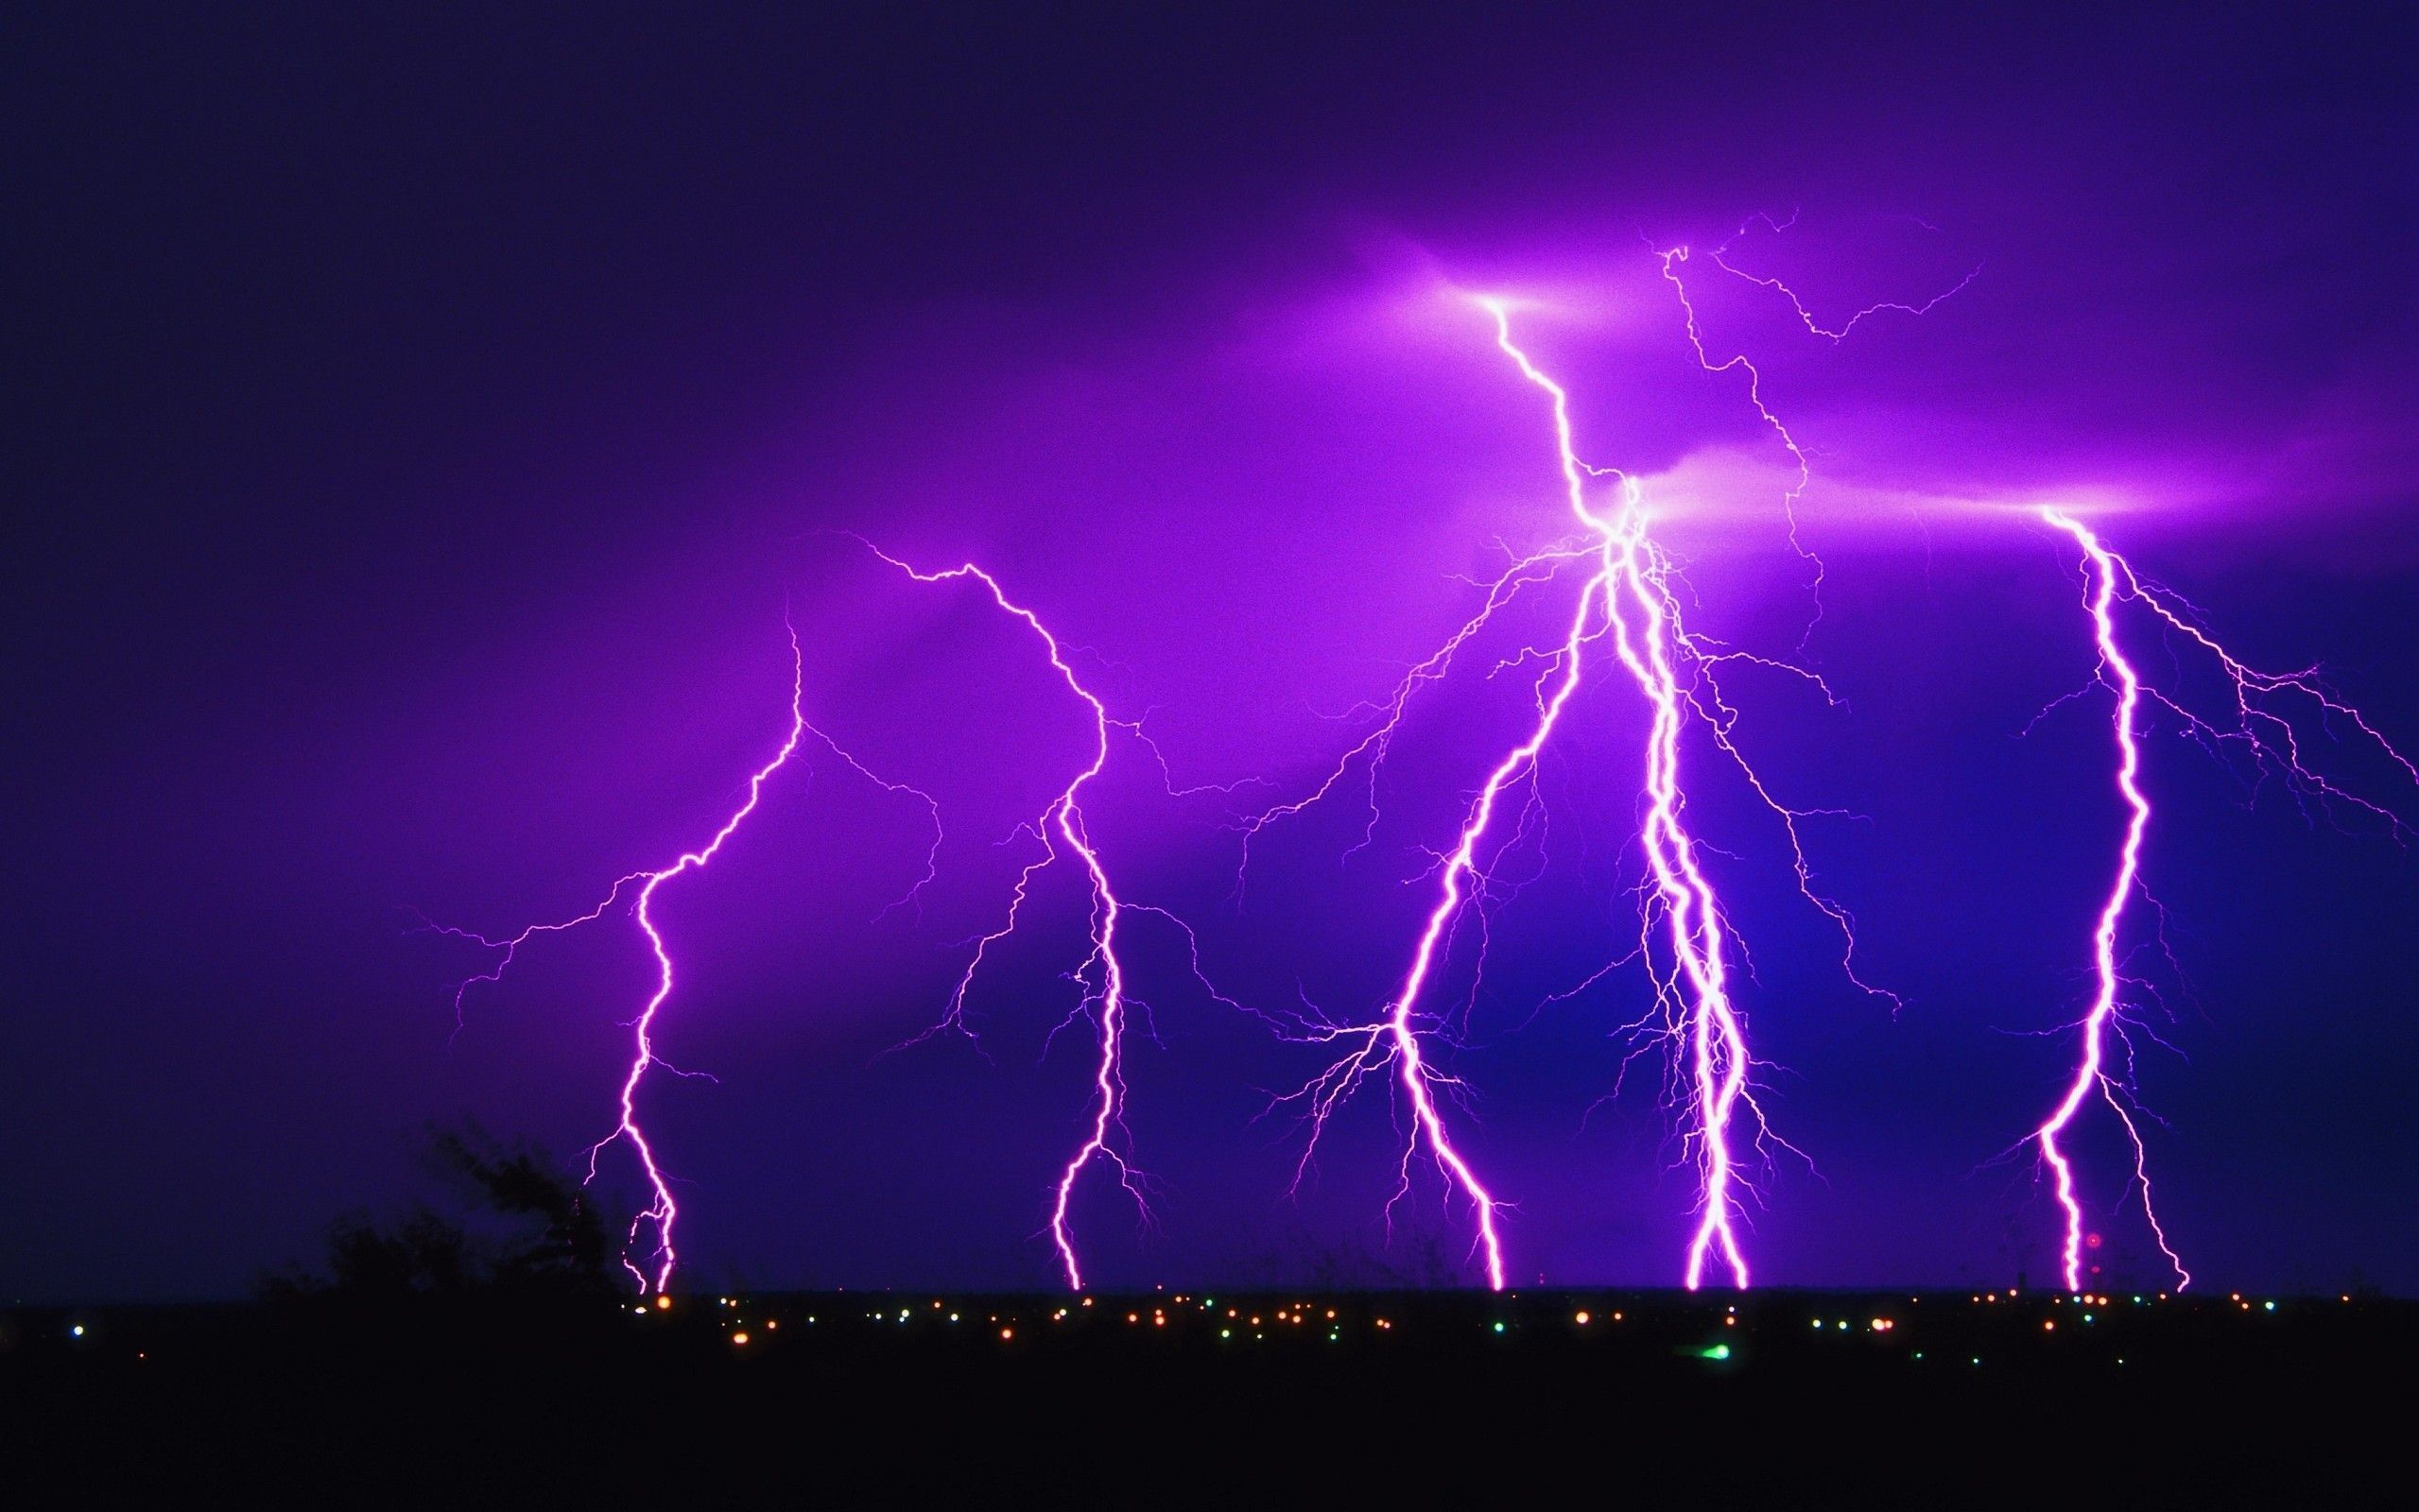 A purple lightning storm over a city at night. - Lightning